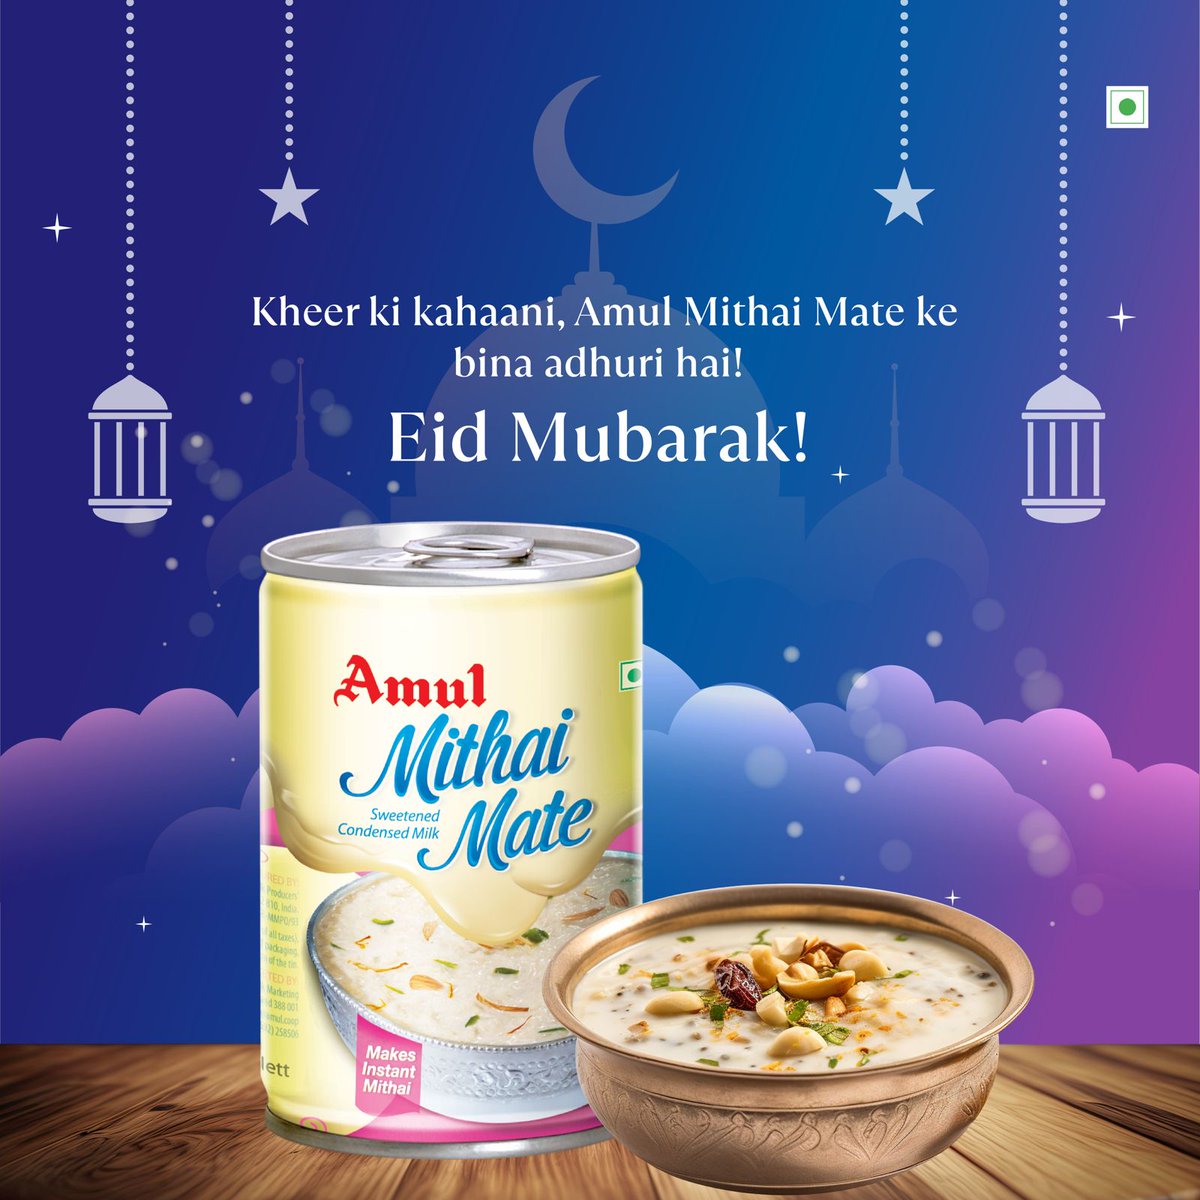 A bowl of sweet & creamy Kheer made extra delicious with Amul Mithai Mate. Eid Mubarak! #Amul #AmulMithaiMate #SweetEidMoments #HomemadeKheer